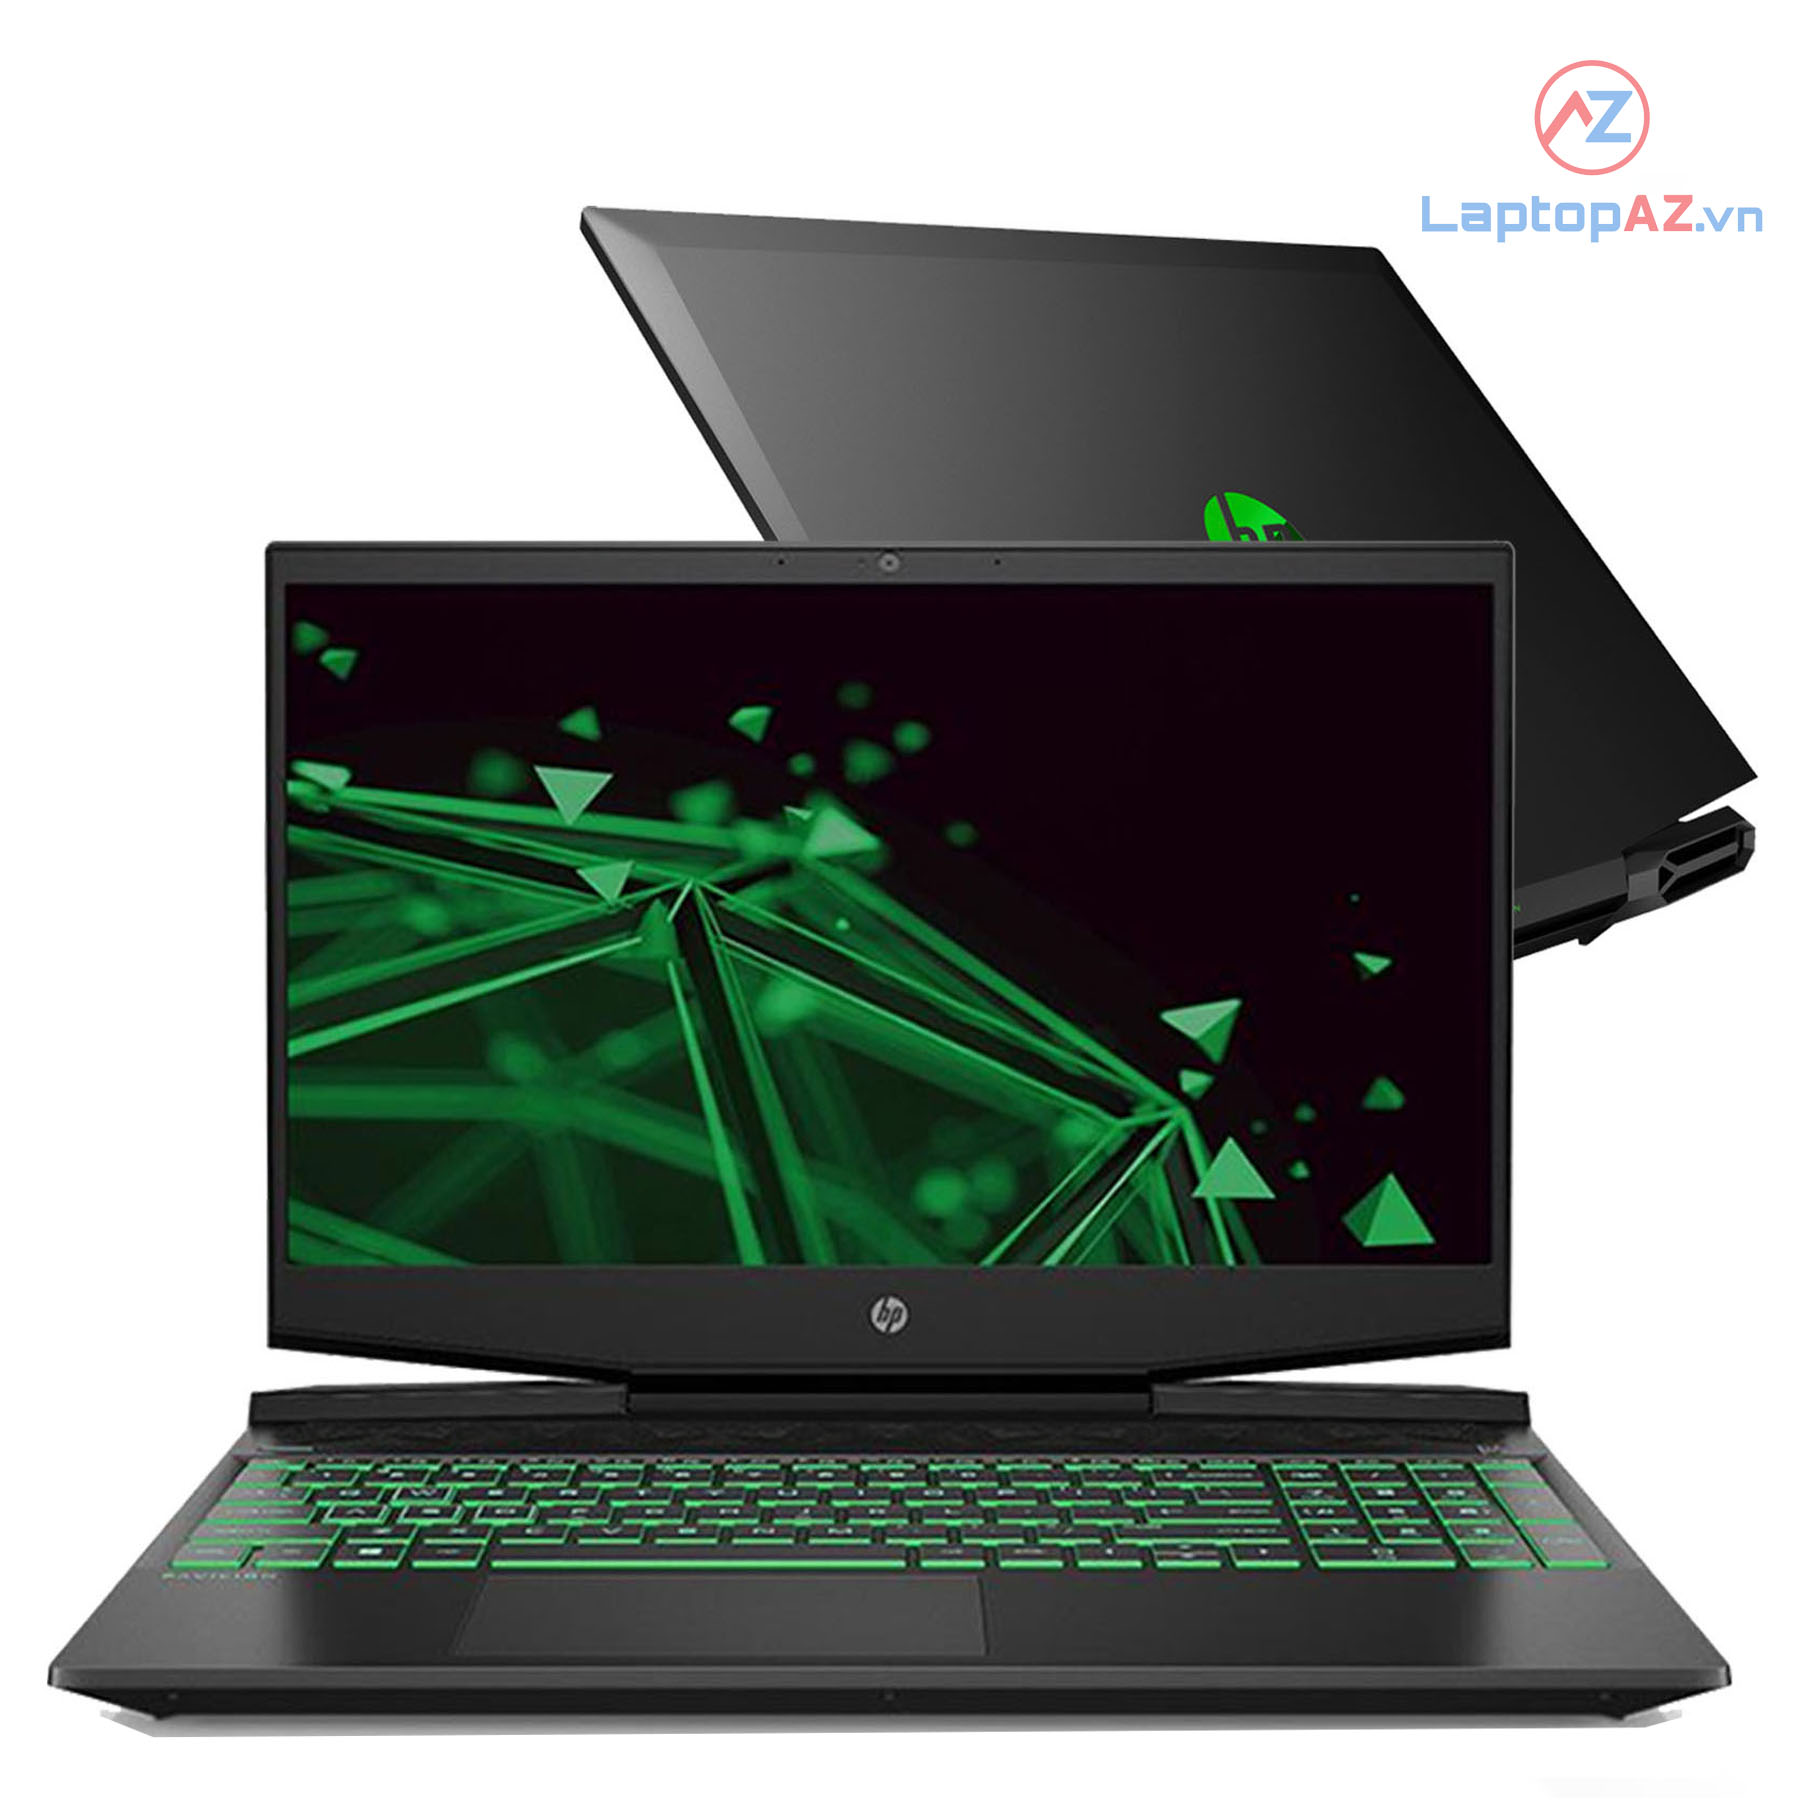  [Mới 100%] Laptop HP Pavilion Gaming 15 DK0068 - Core i5 9300H, 8GB, 256GB, GTX 1050, 15.6 inch FHD IPS